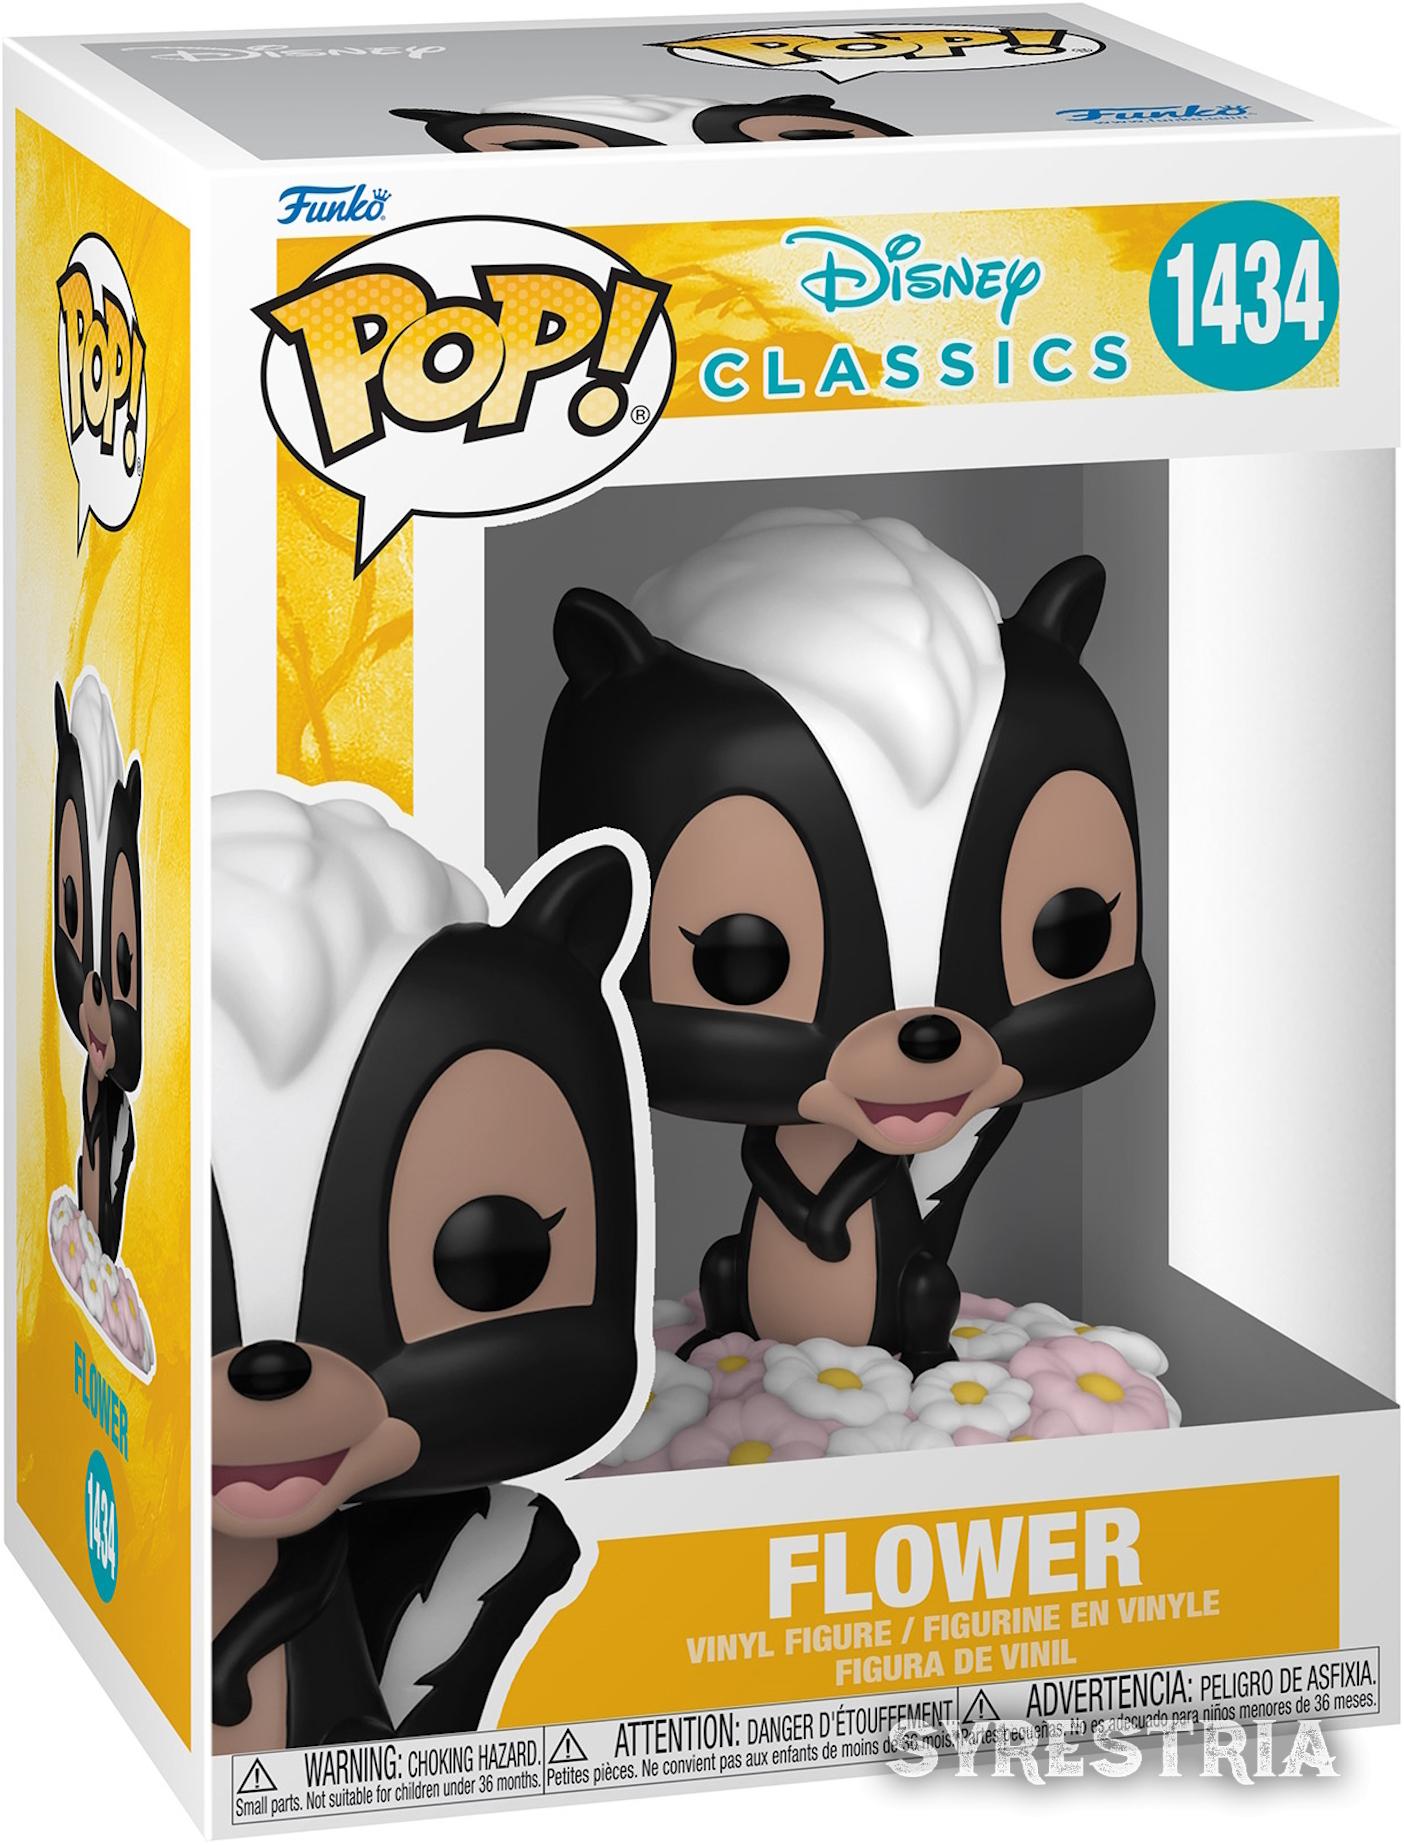 Disney Classics - Flower 1434  - Funko Pop! Vinyl Figur